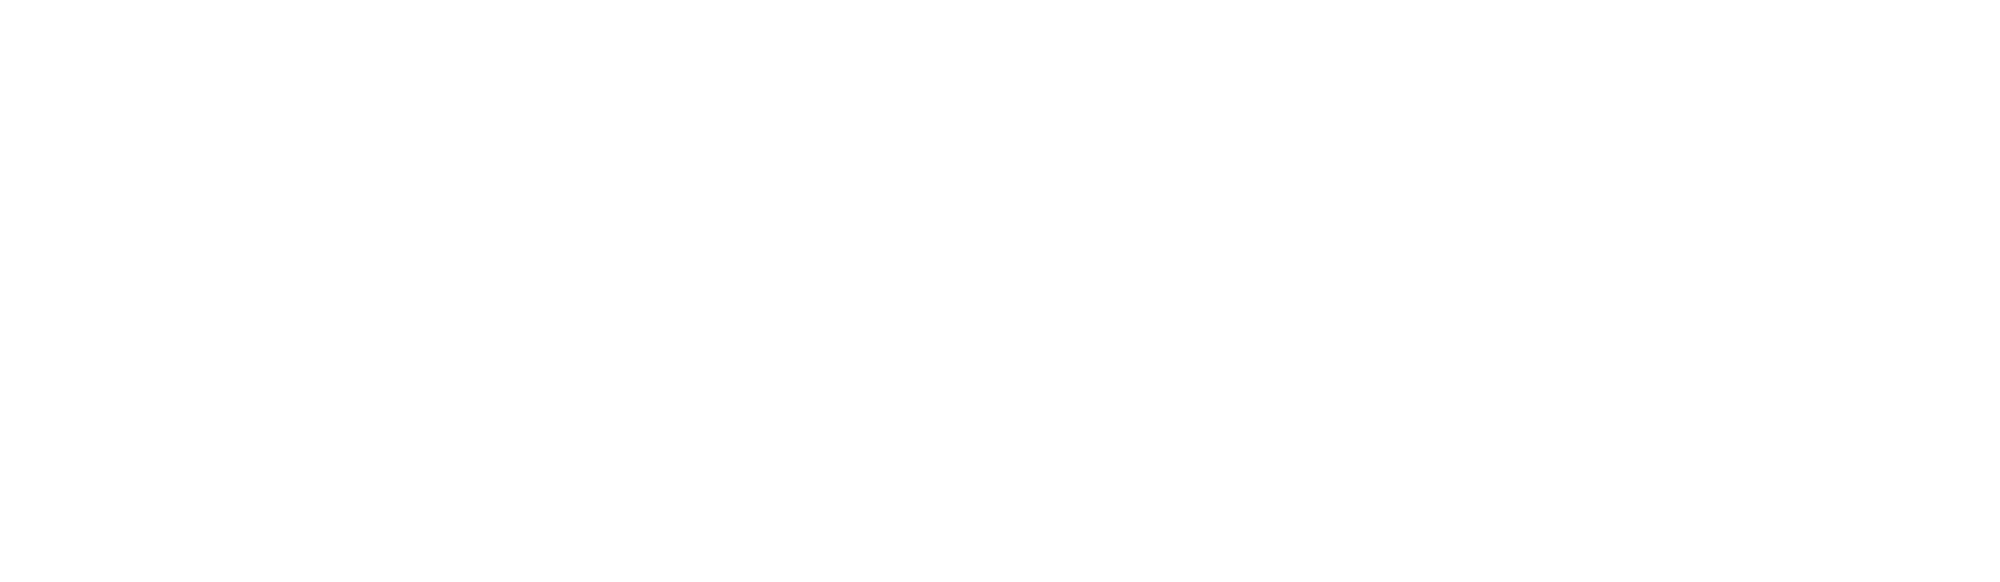 Aryadit Solutions